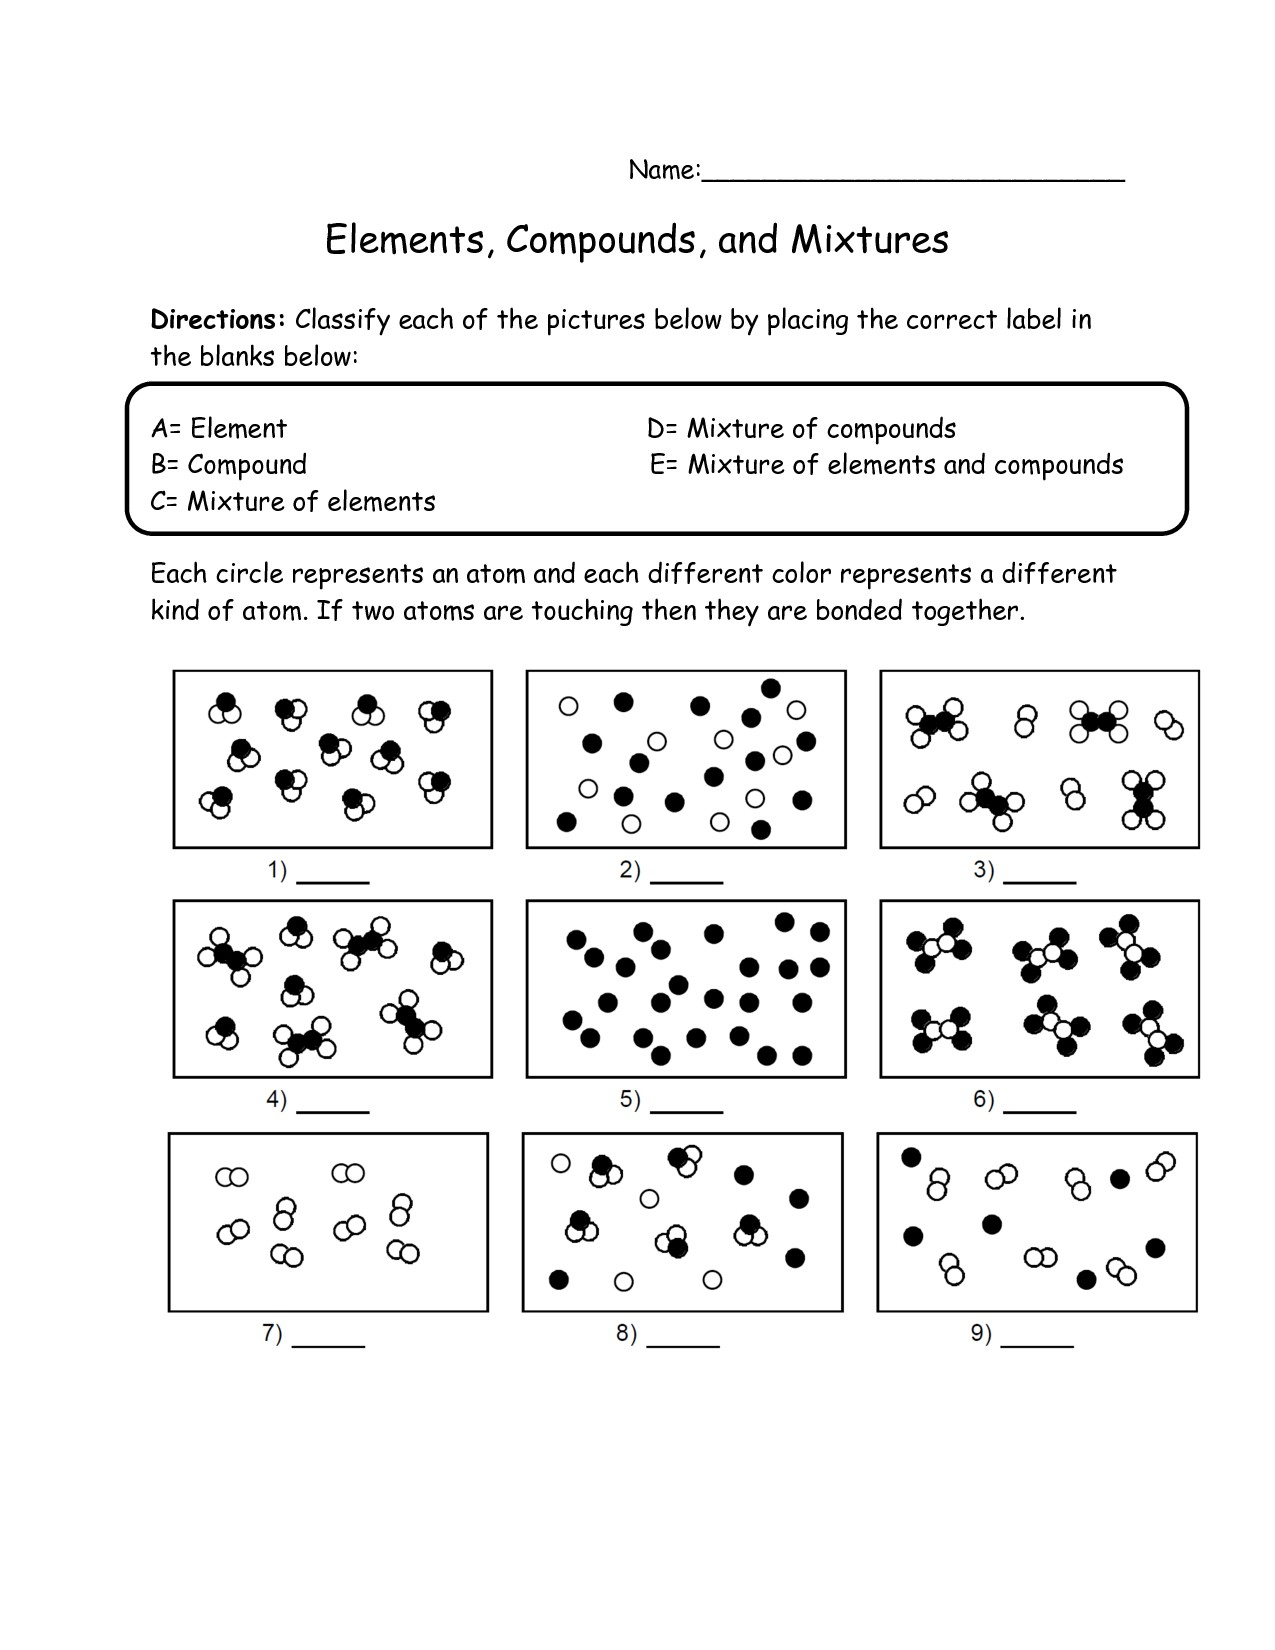 Elements Mixtures Compounds Worksheet